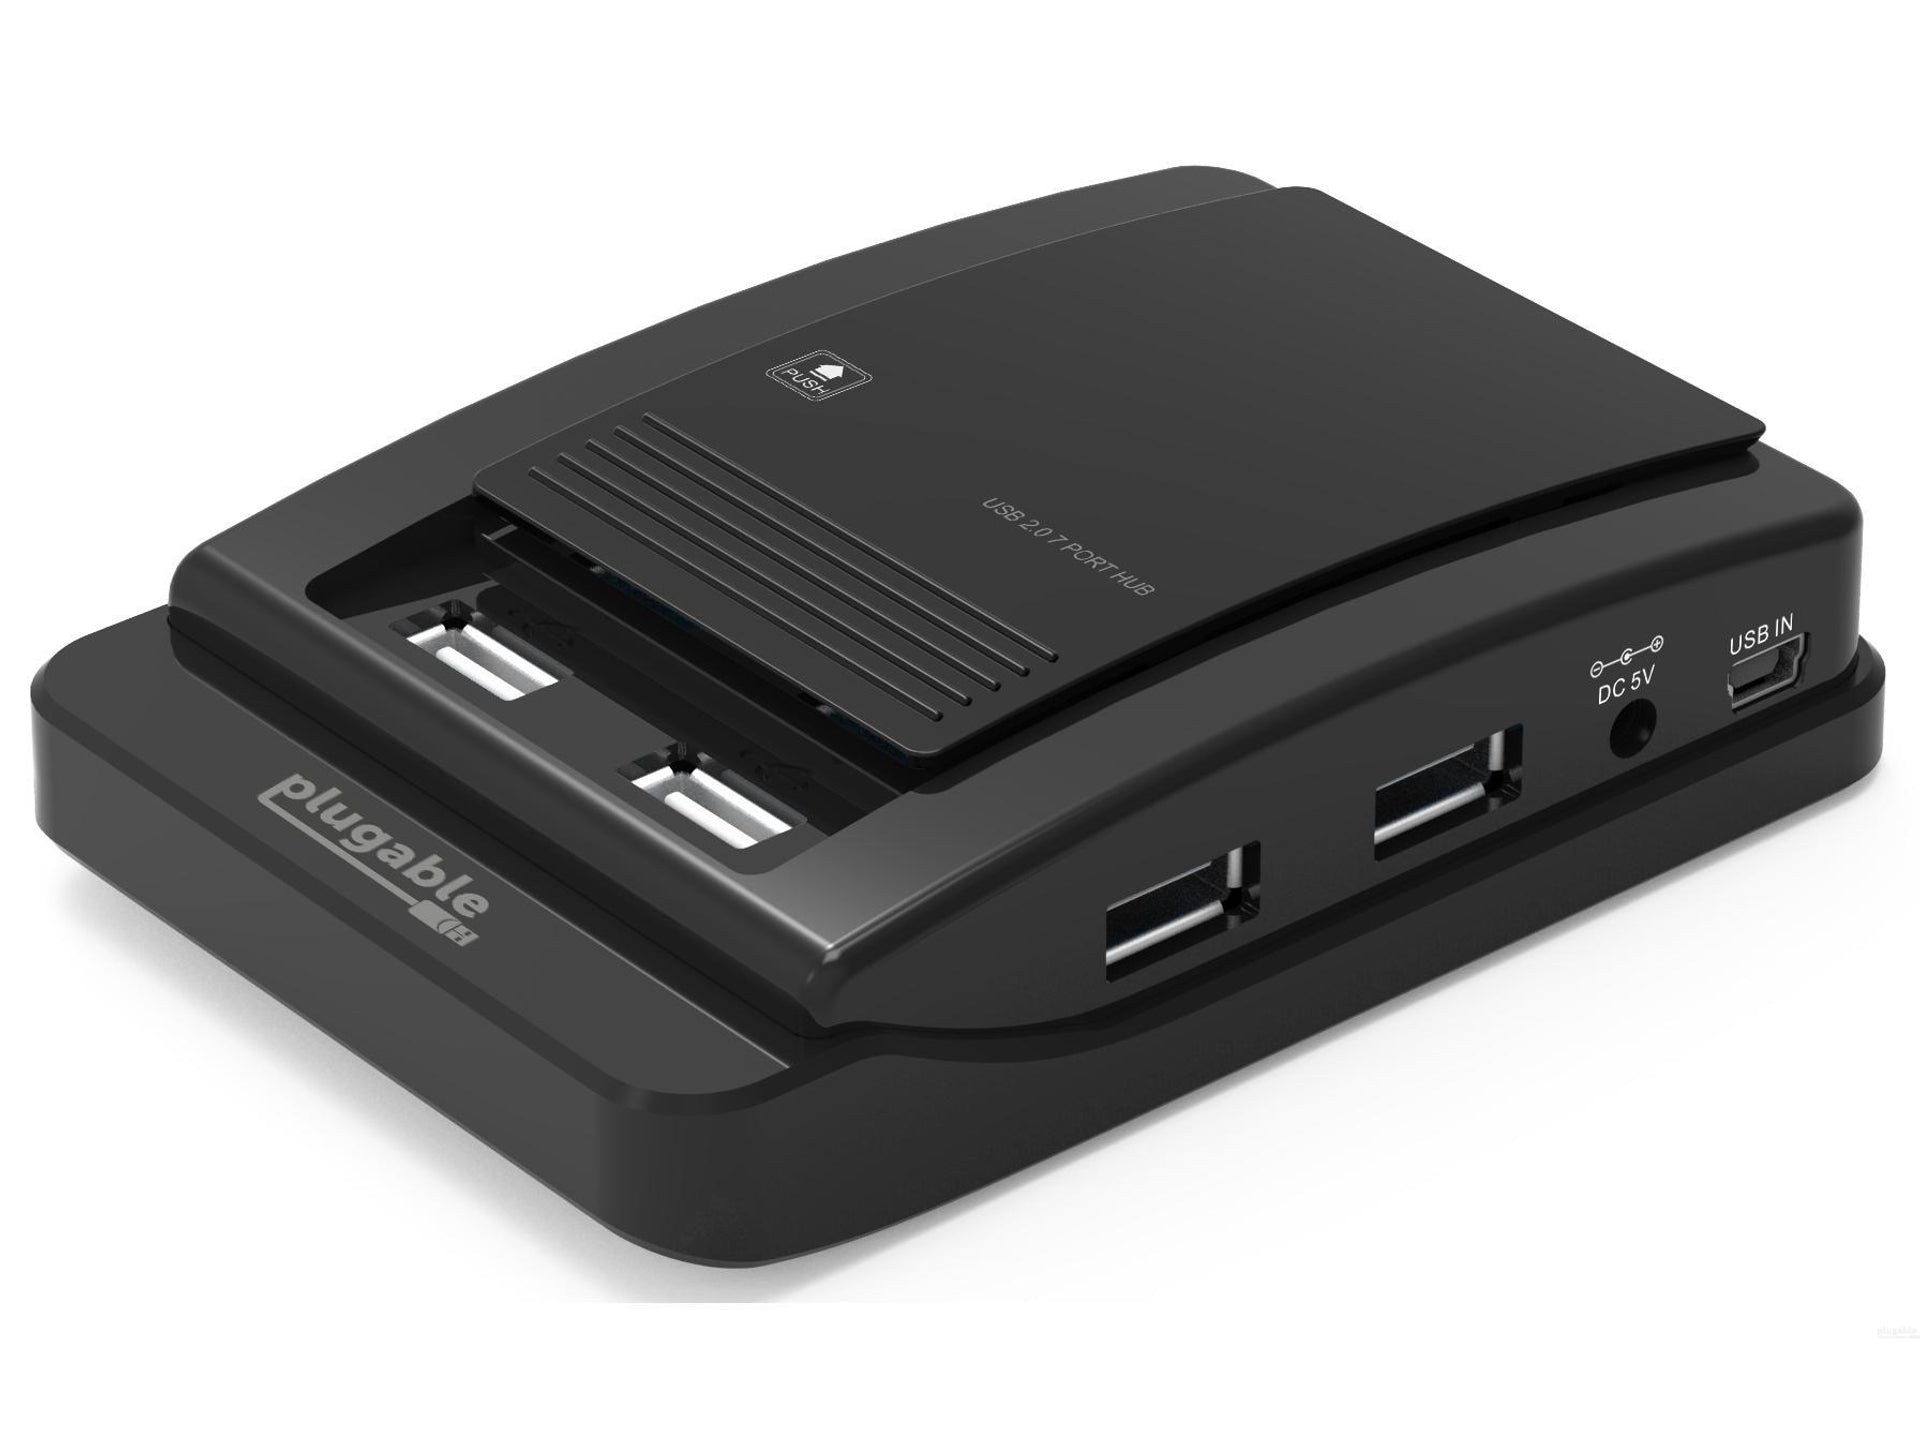 Terminologi Bliv ophidset Garanti Plugable USB 2.0 7-Port Hub with 15W Power Adapter – Plugable Technologies